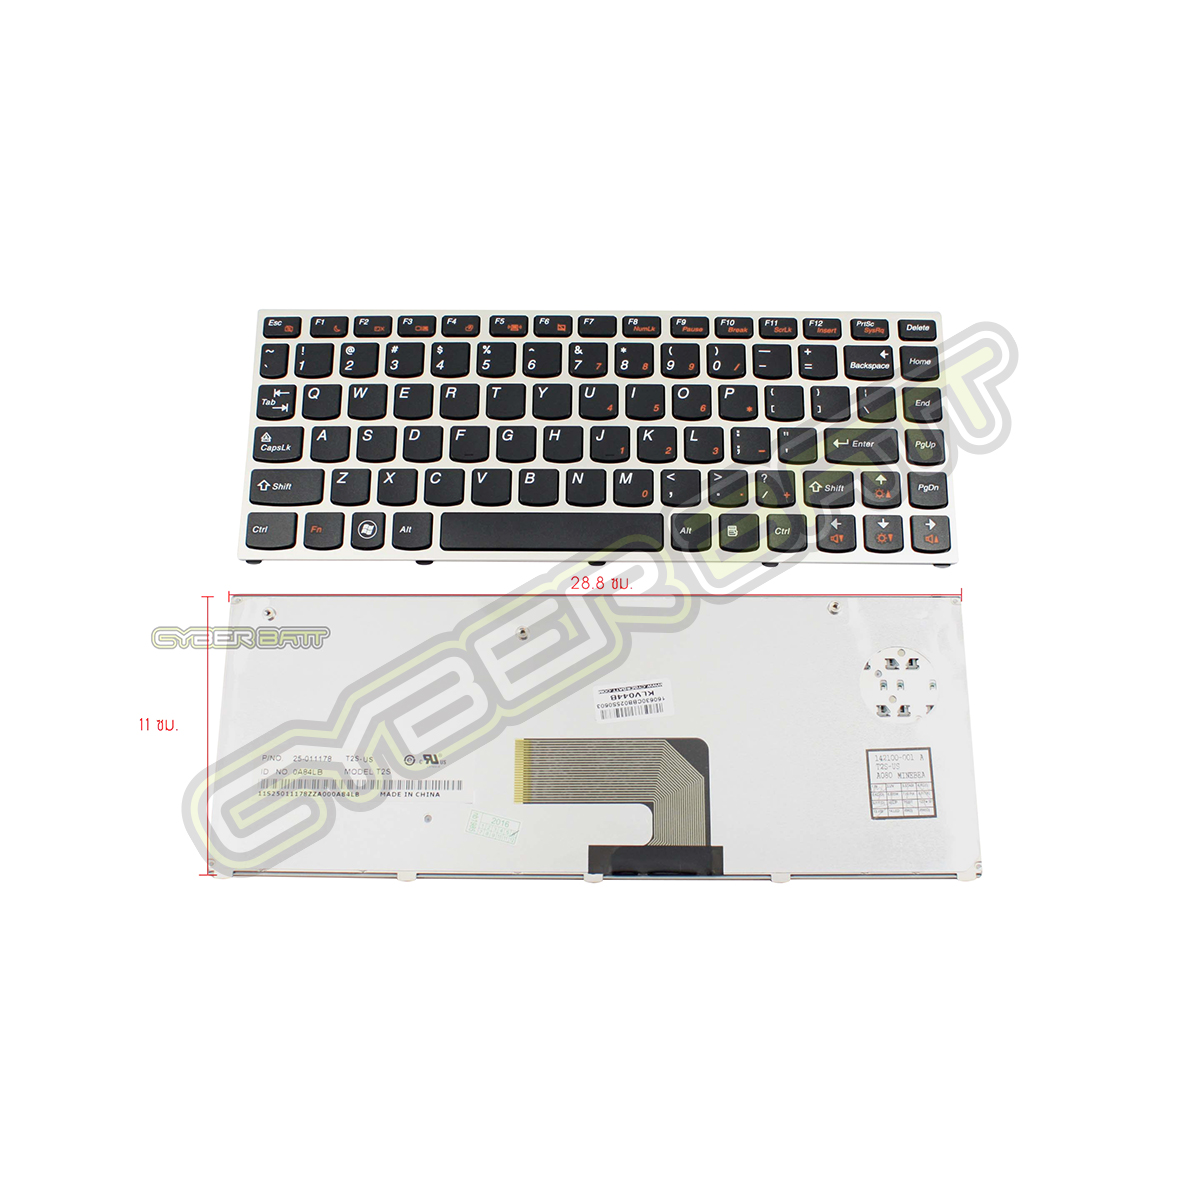 Keyboard Lenovo IdeaPad U460 Black US (With Frame) 